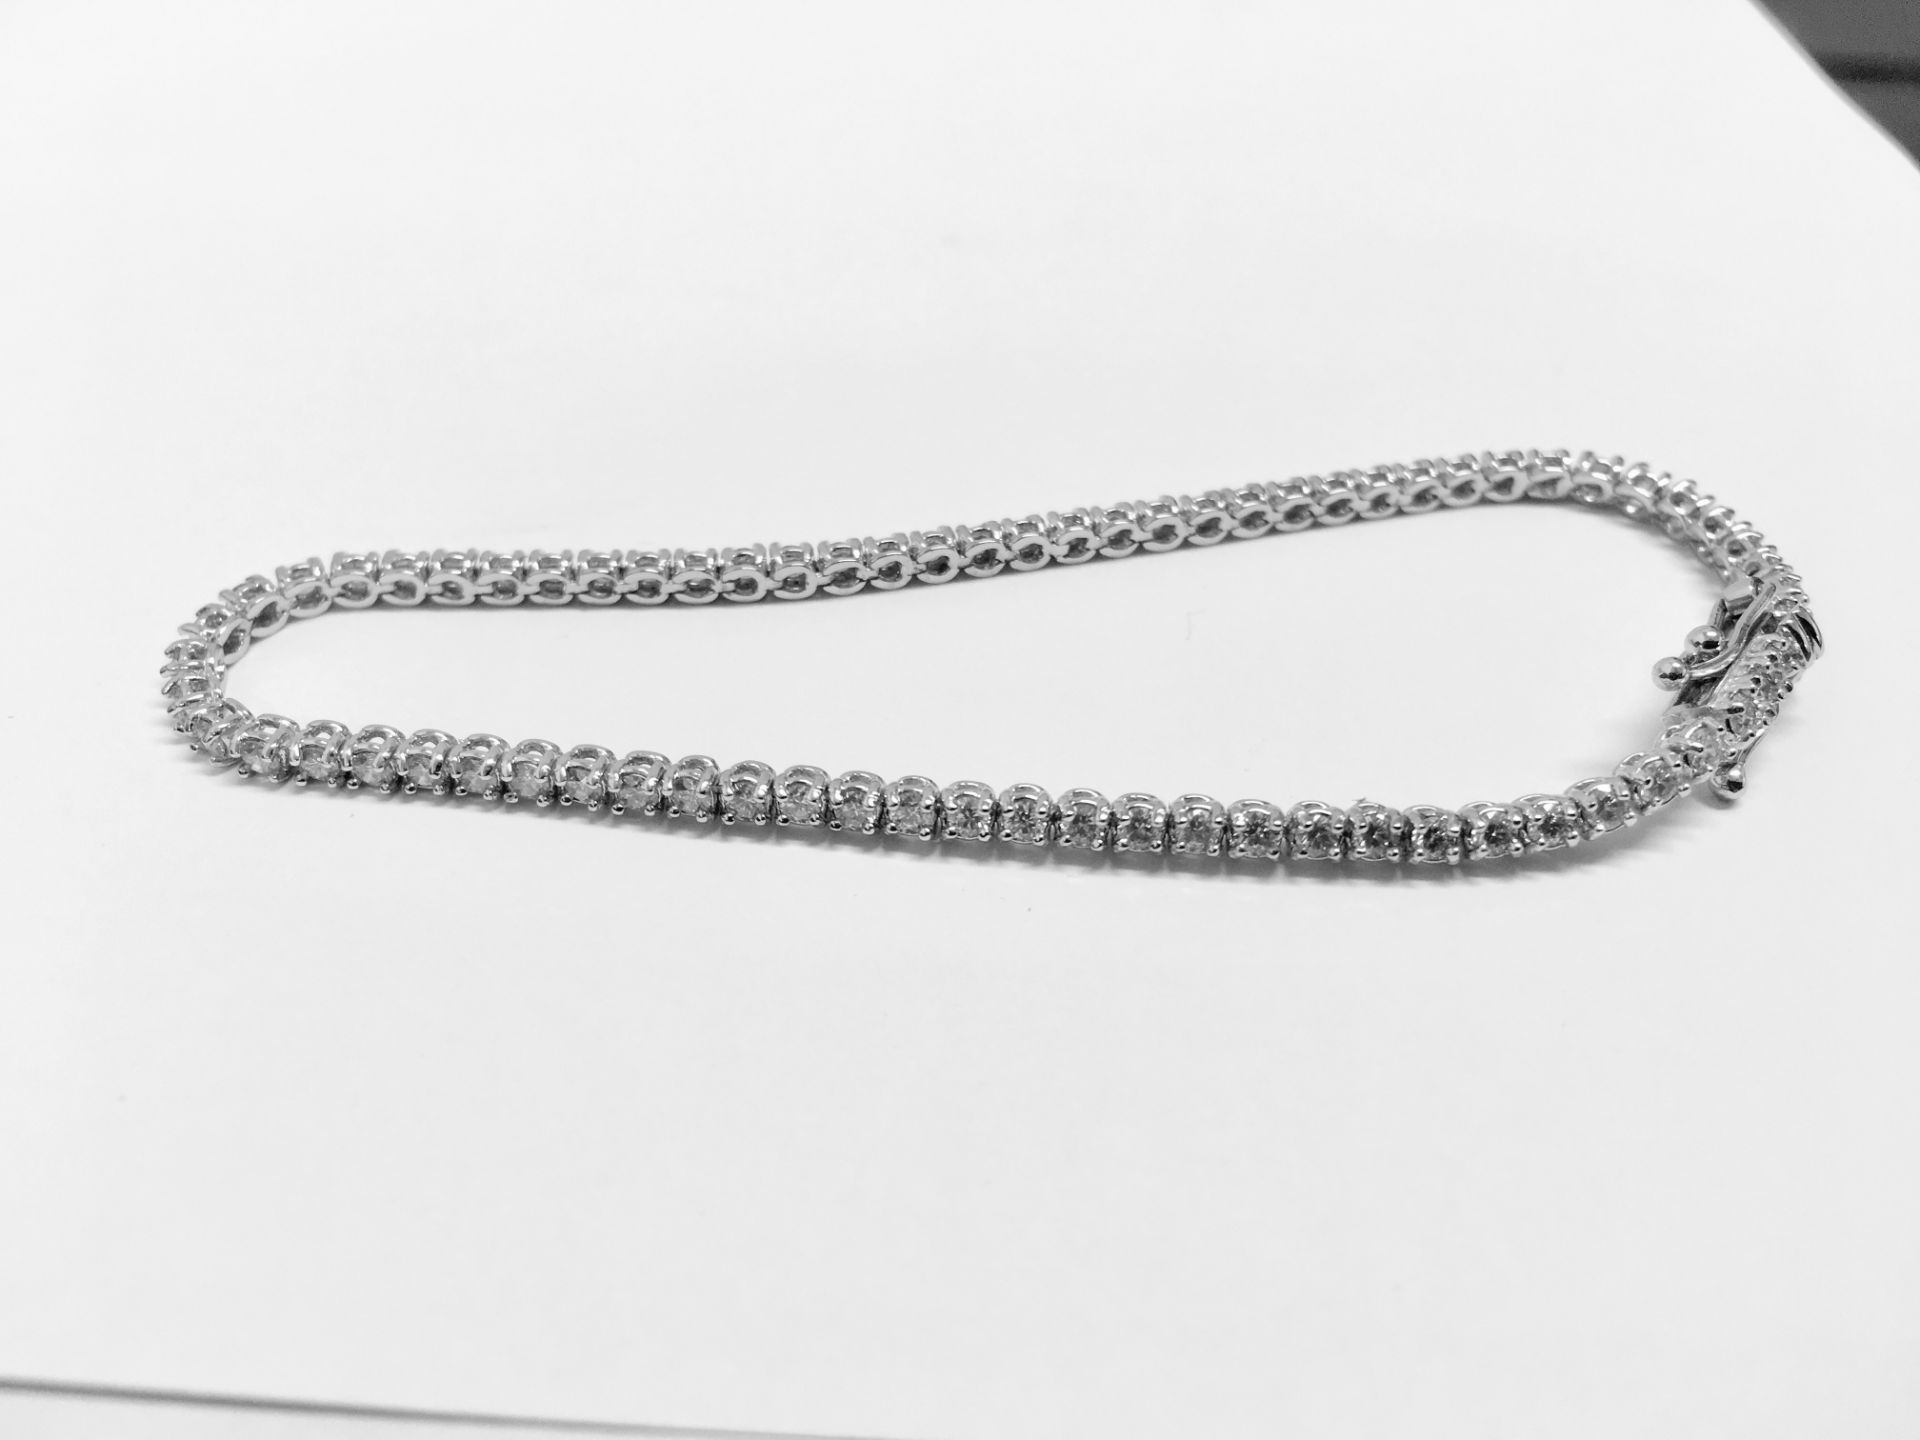 4.50Ct Diamond Tennis Bracelet Set With Brilliant Cut Diamonds Of H Colour, Si3 Clarity. - Image 19 of 19